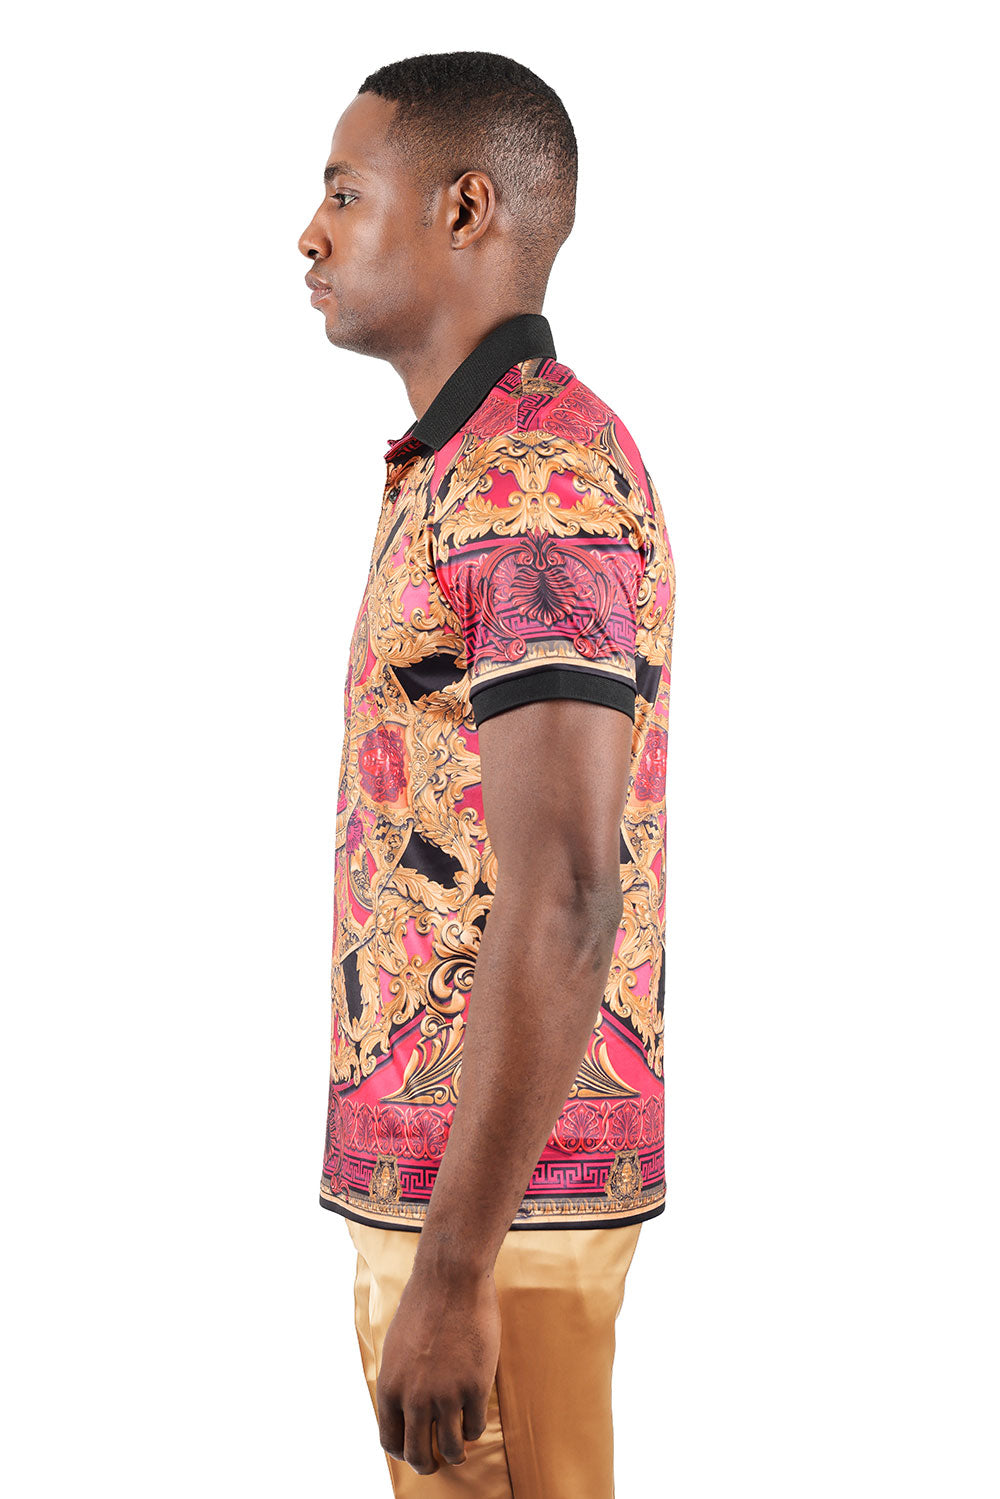 Barabas Men's Floral Medusa Graphic Tee Polo Shirts 3PSP16 Acid Pink